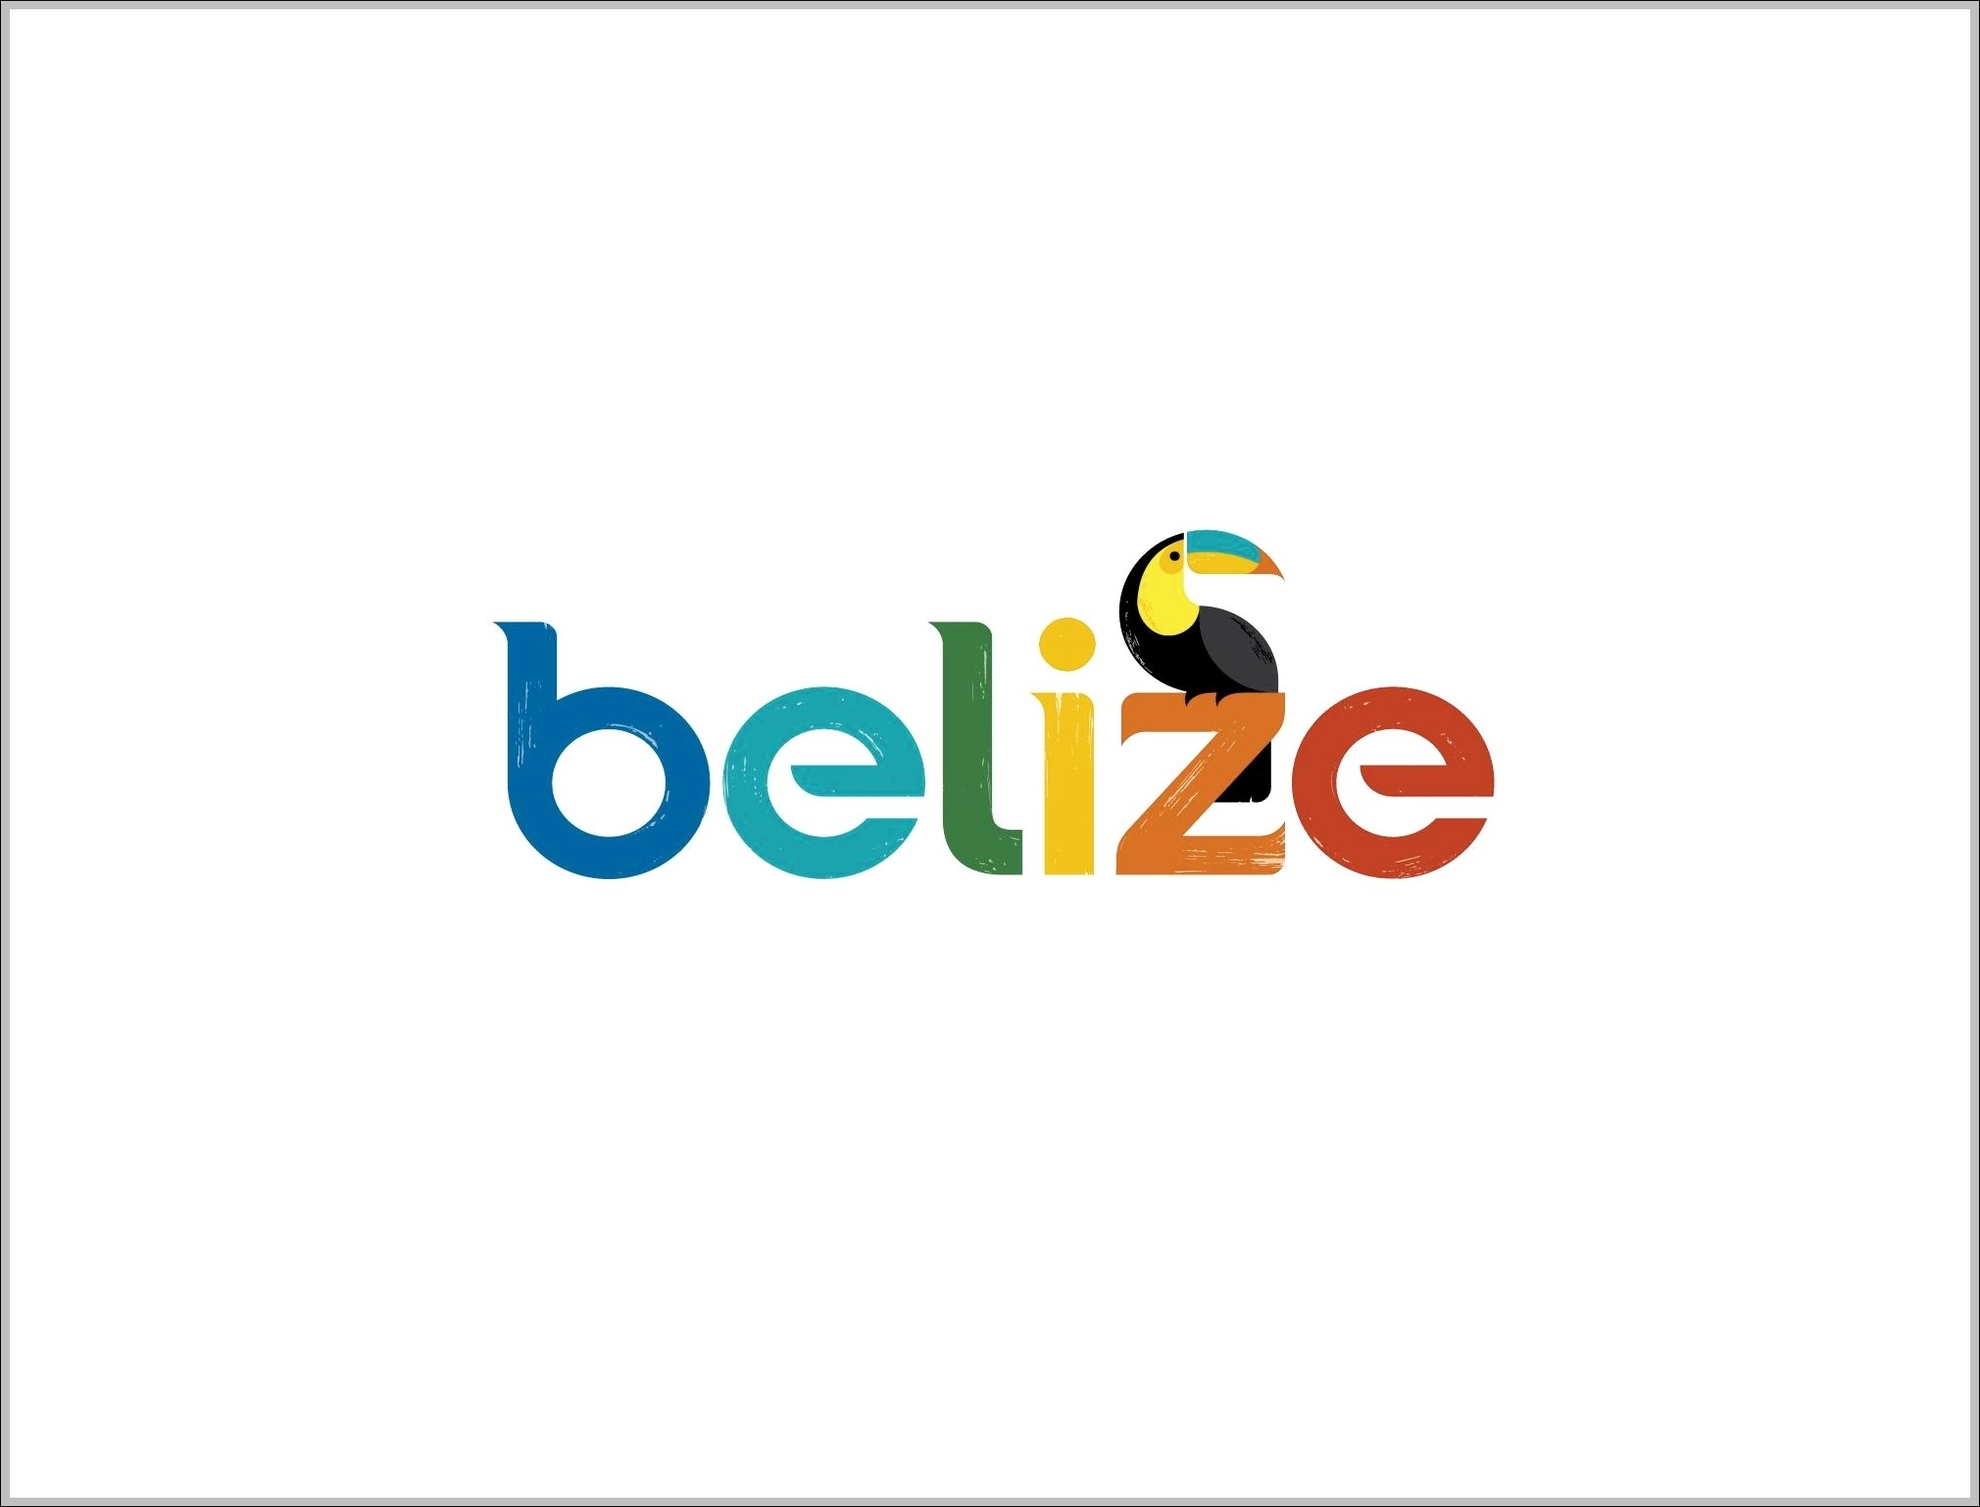 Belize Tourism sign